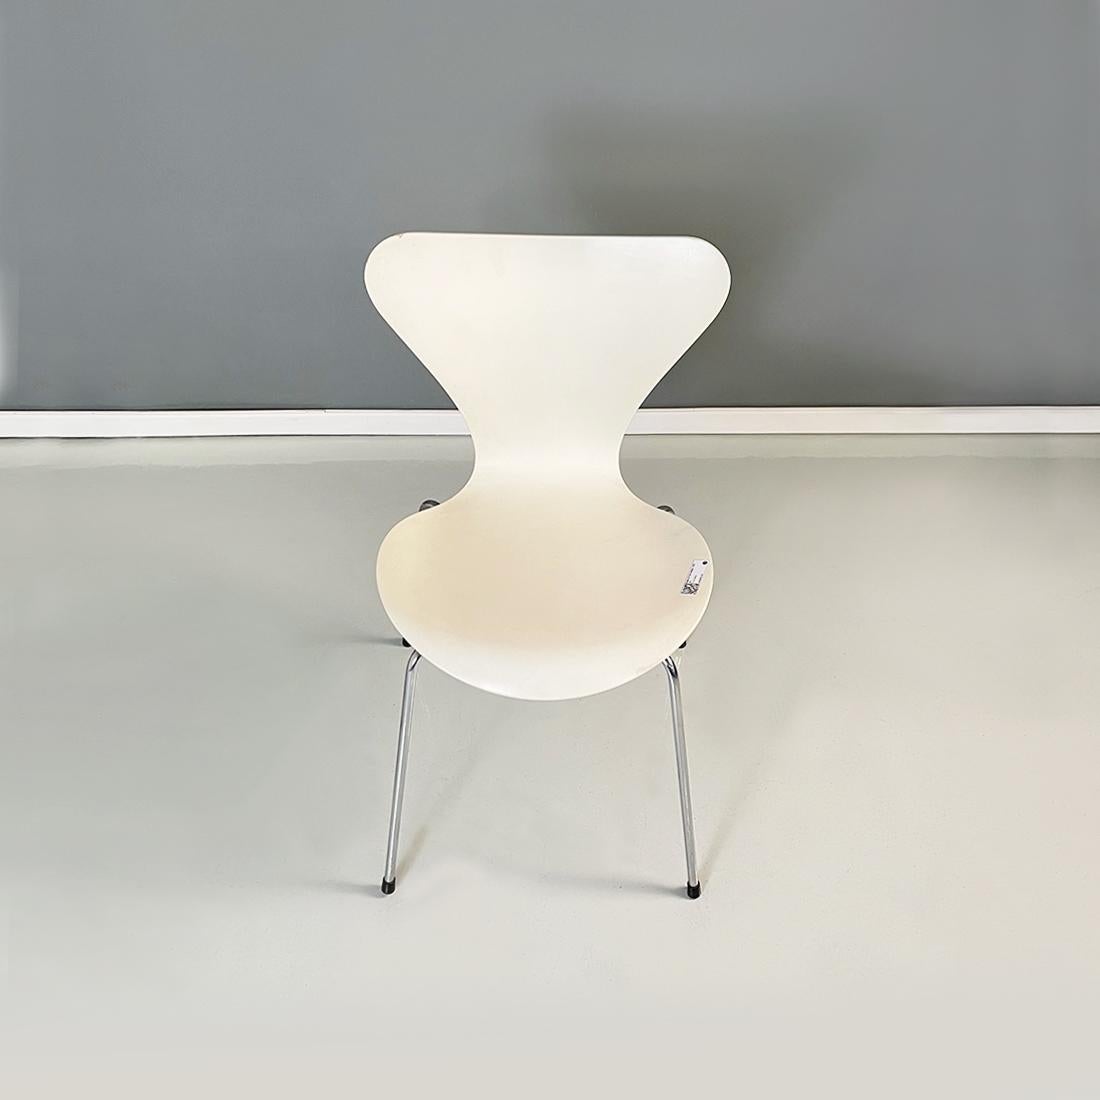 Danish Modern White Chairs of Series 7 by Arne Jacobsen for Fritz Hansen, 1970s For Sale 10